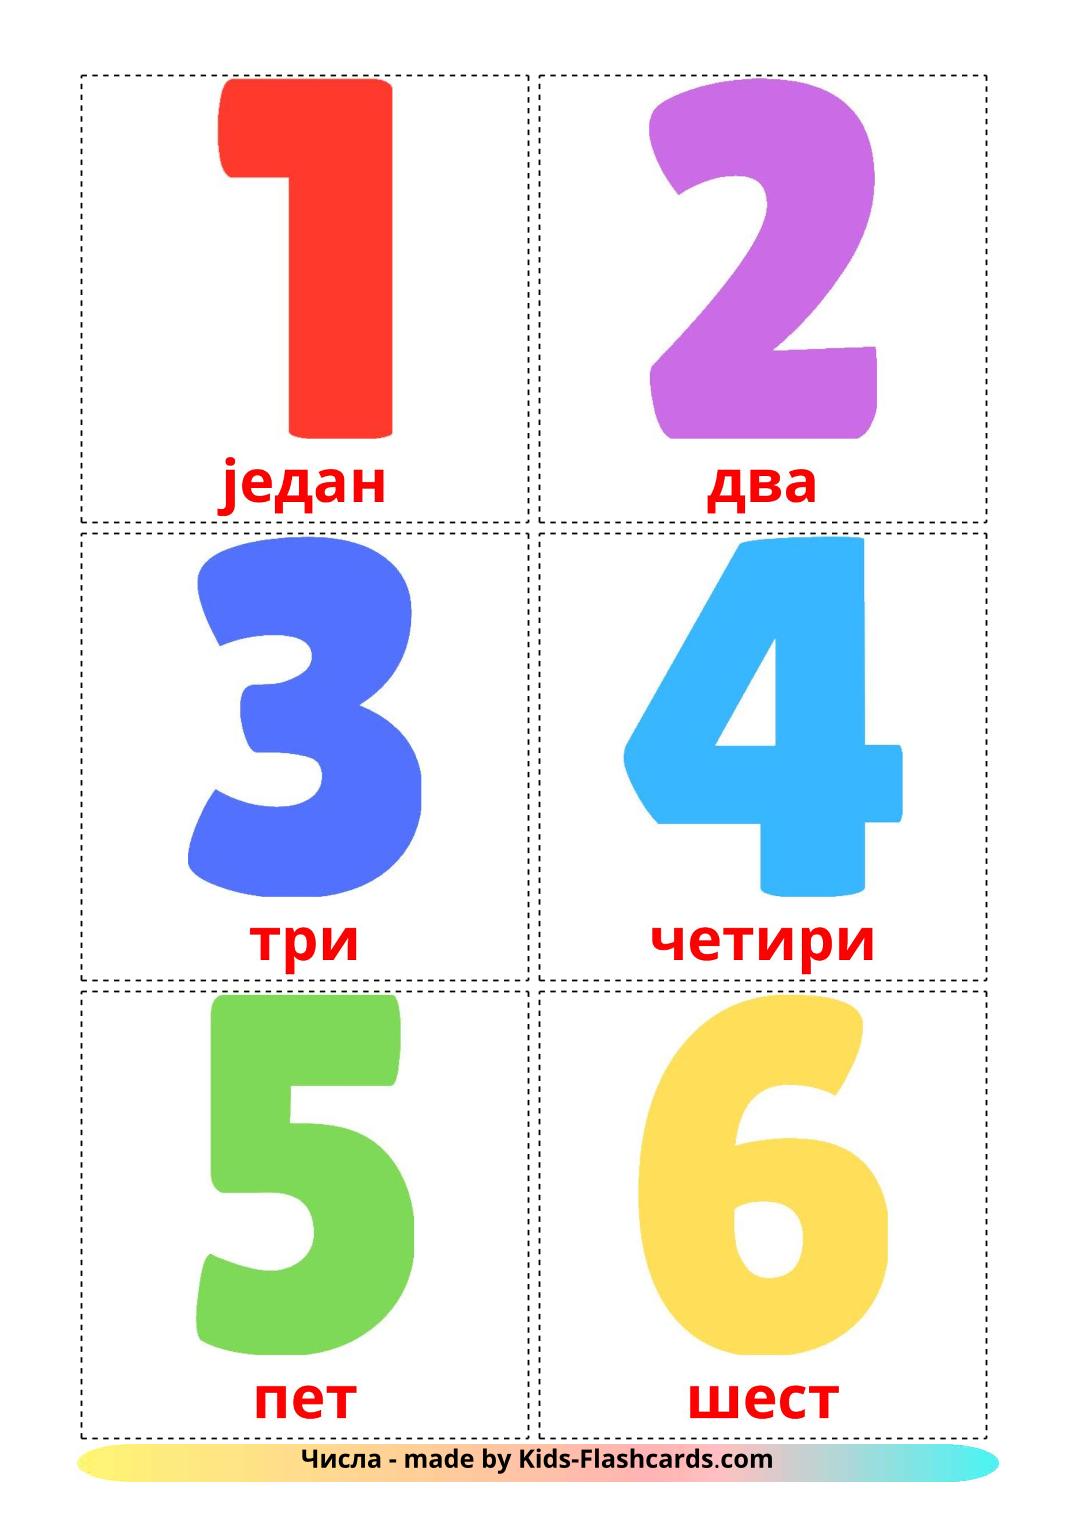 Des Nombres (1-20) - 20 Flashcards serbe(cyrillique) imprimables gratuitement